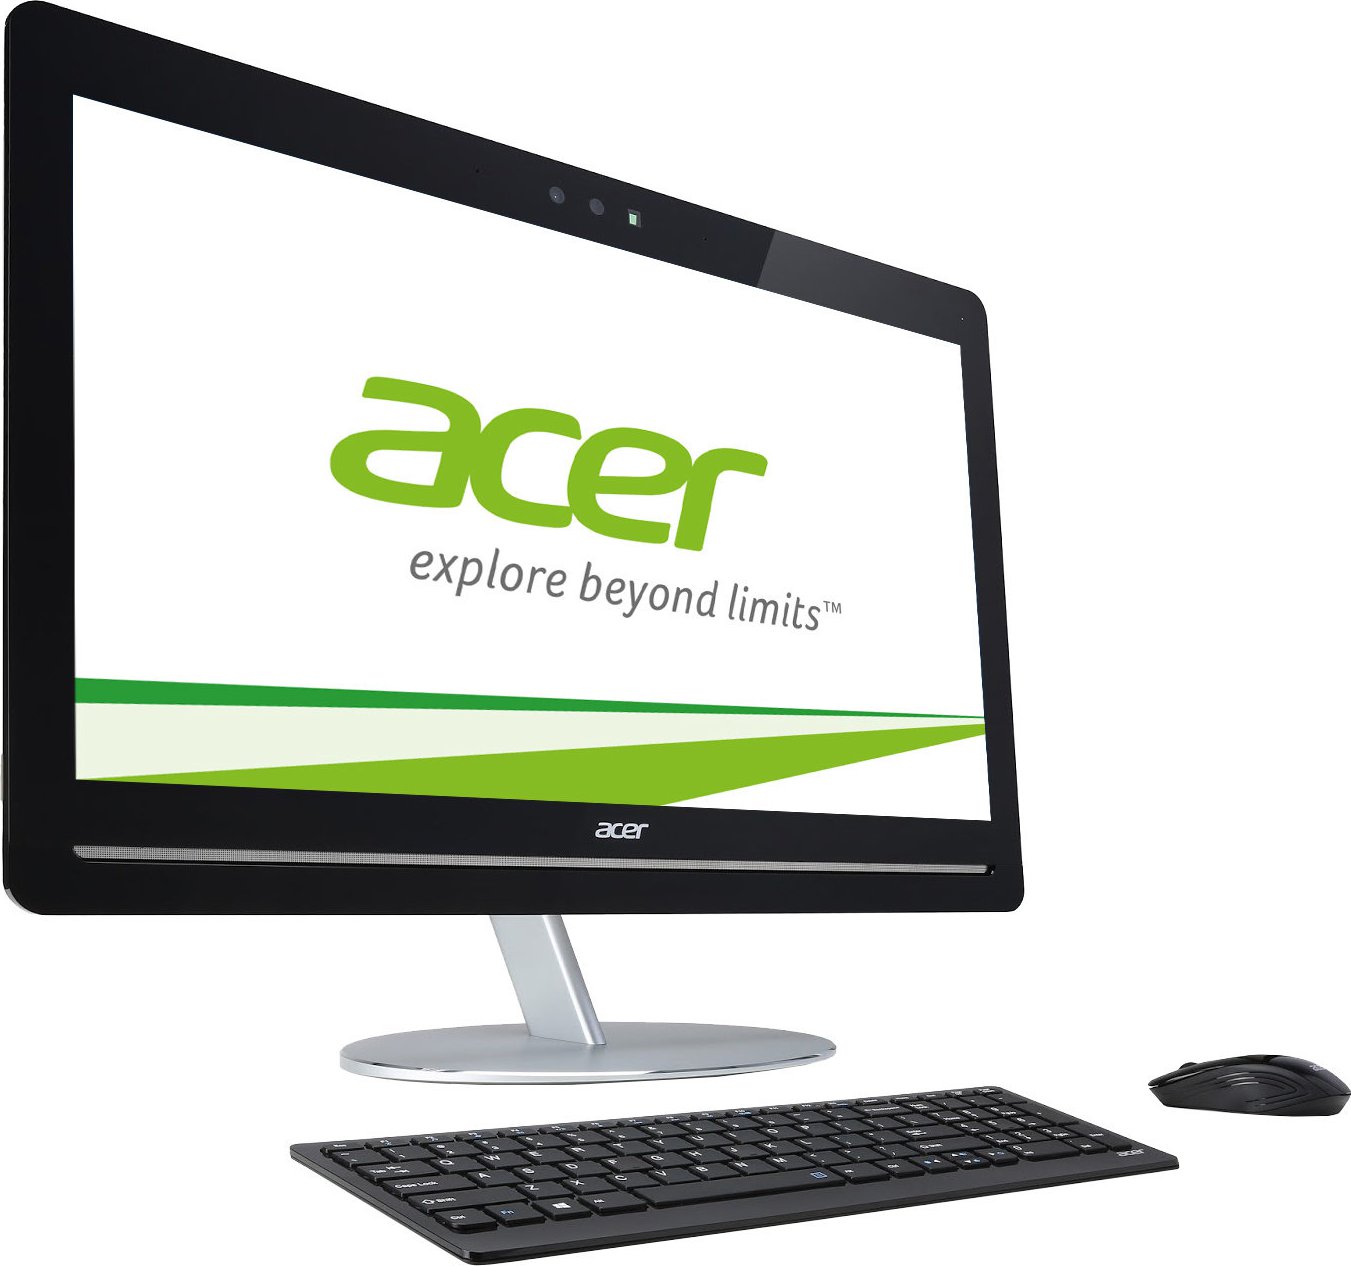 Acer ohr303. Моноблок Acer vez2740g. Acer z5710 RF TV. Матрица моноблока Acer. Моноблок Acer экранное меню.